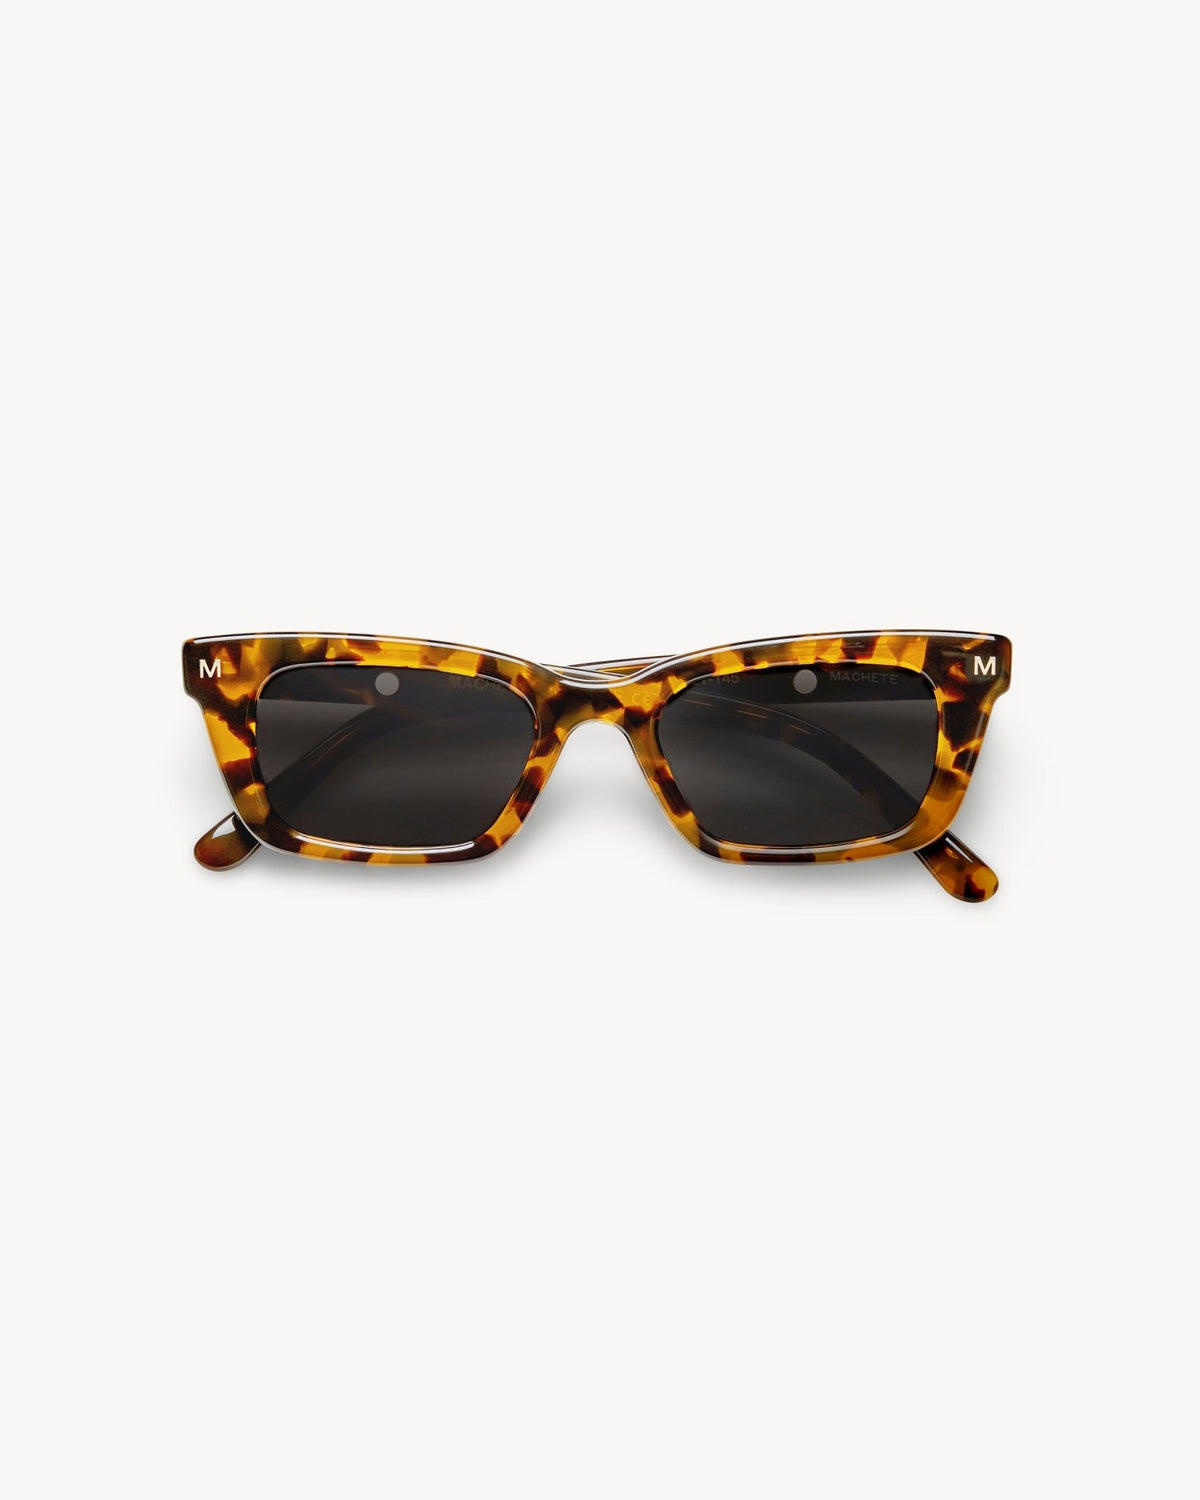 MACHETE Ruby Sunglasses in Classic Tortoise